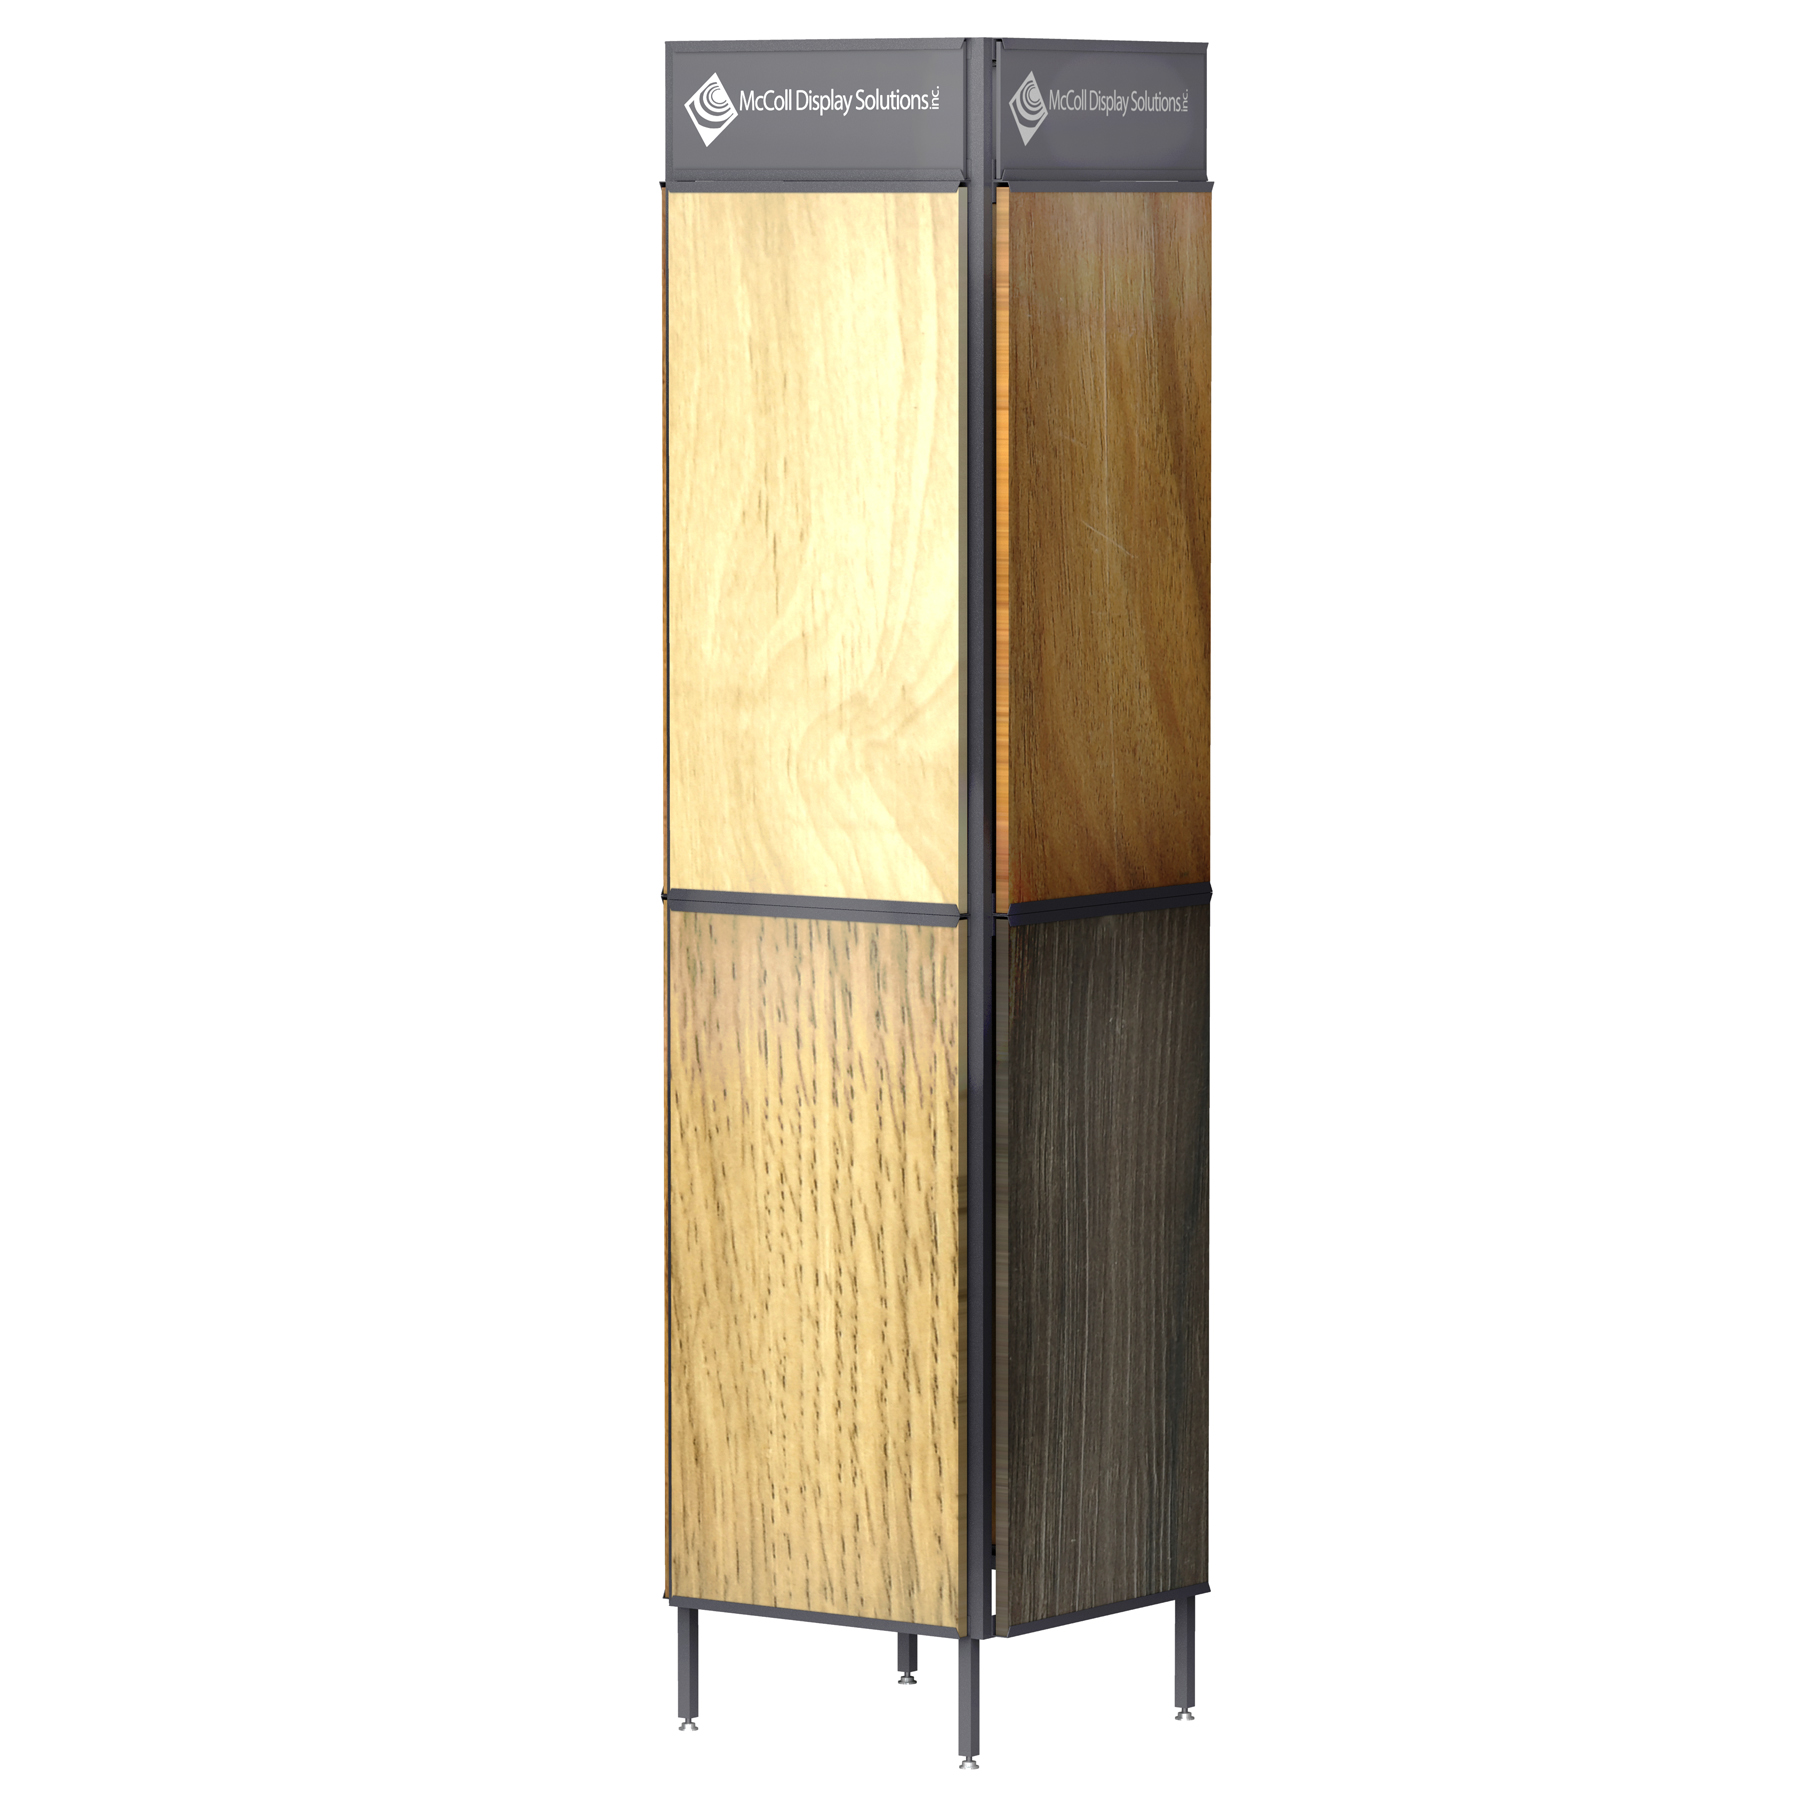 CD07 Steel Tower Square Design Hardwood Bamboo Reclaimed Wood Flooring Laminate System Showroom Displays McColl Display